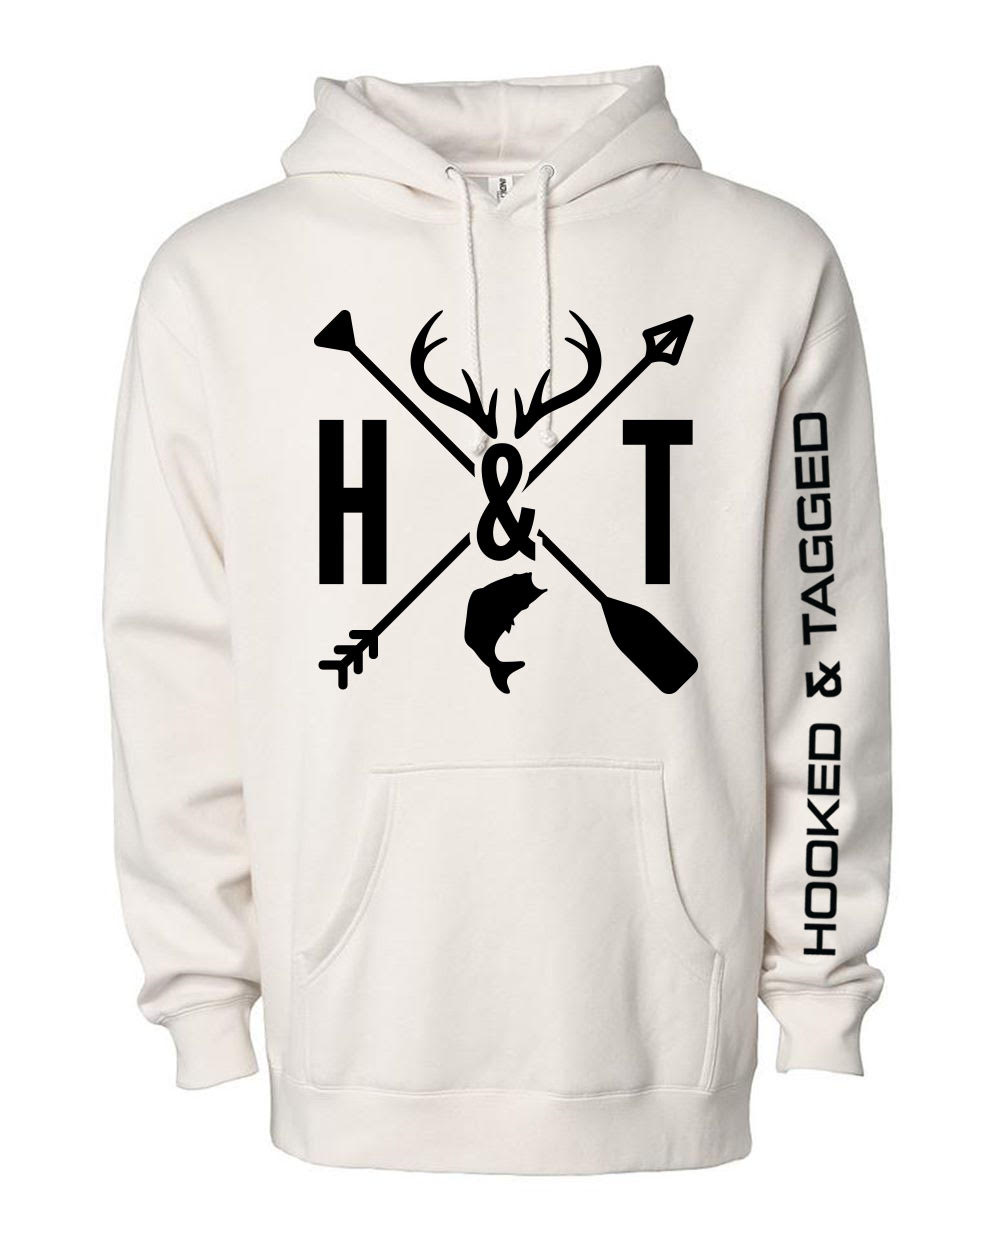 Hunting and fishing hoodies